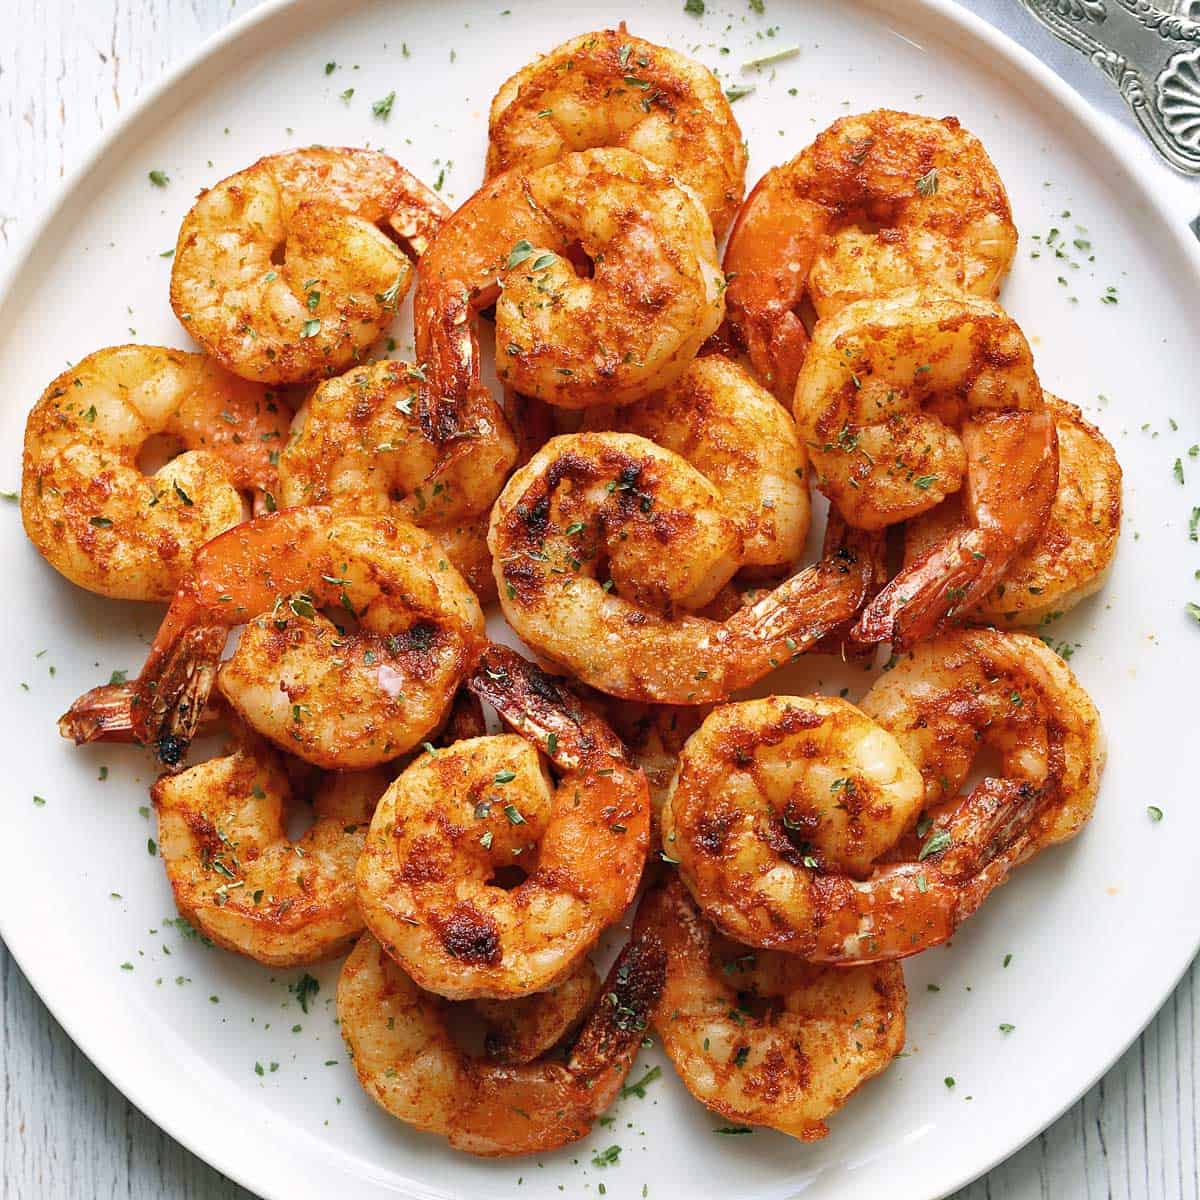 https://healthyrecipesblogs.com/wp-content/uploads/2019/03/broiled-shrimp-featured-2021.jpg